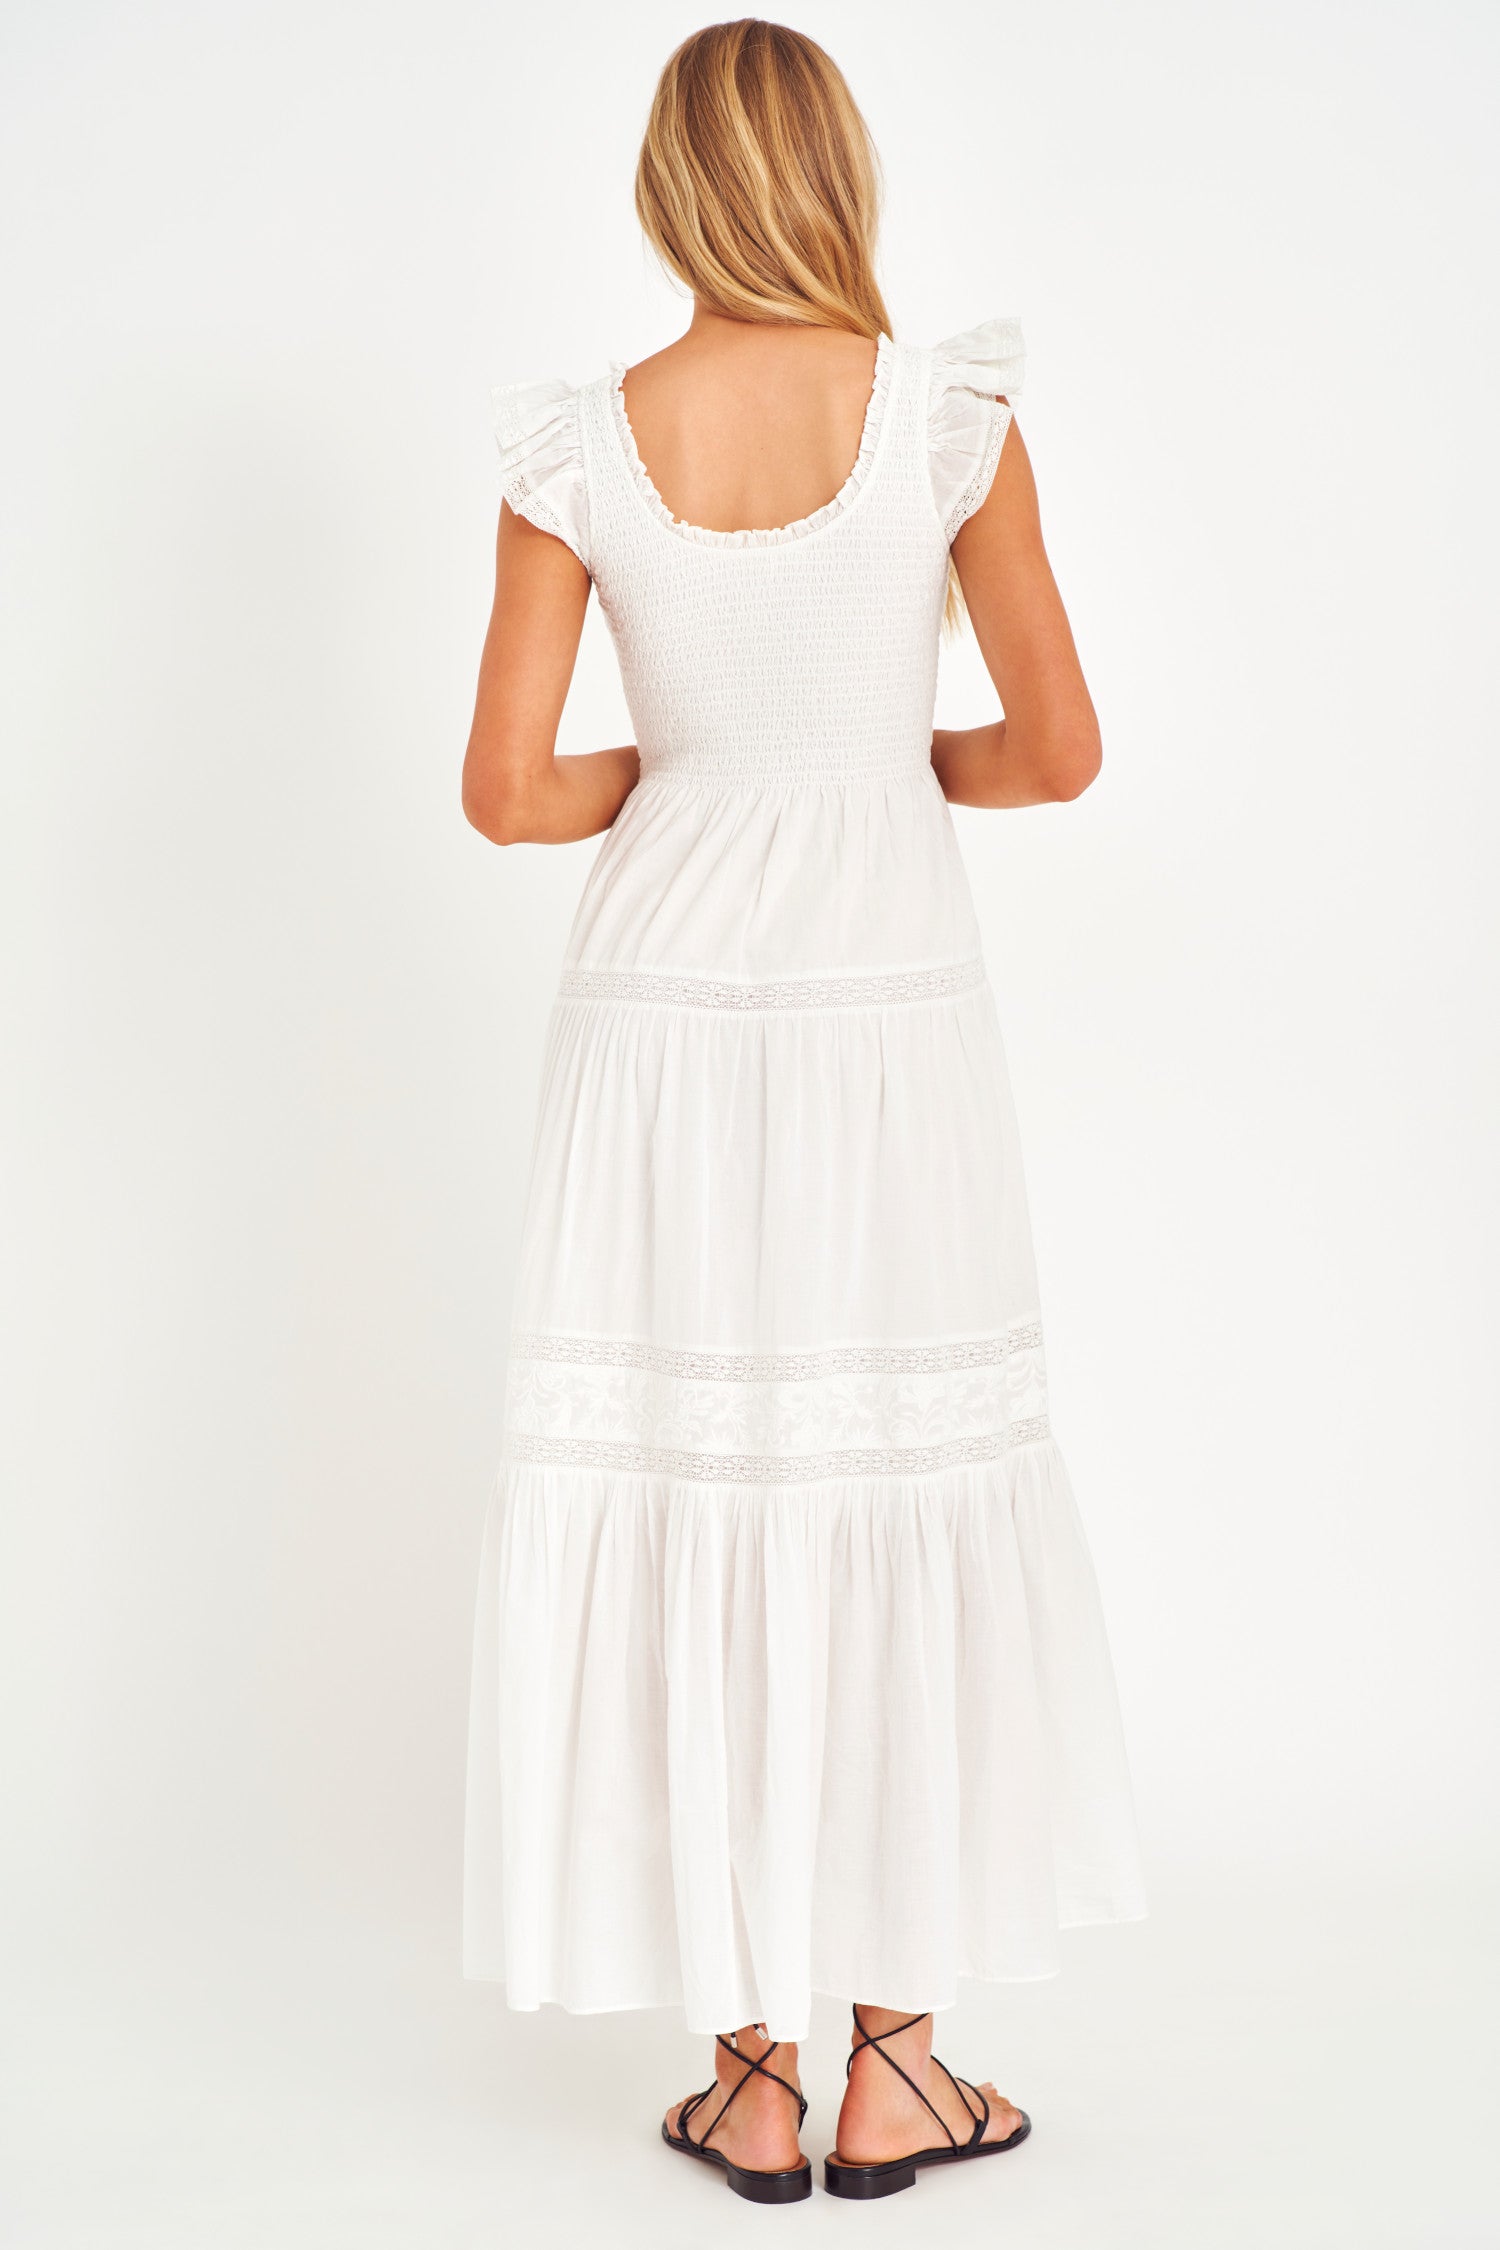 Chessie Heritage Cotton Maxi Dress